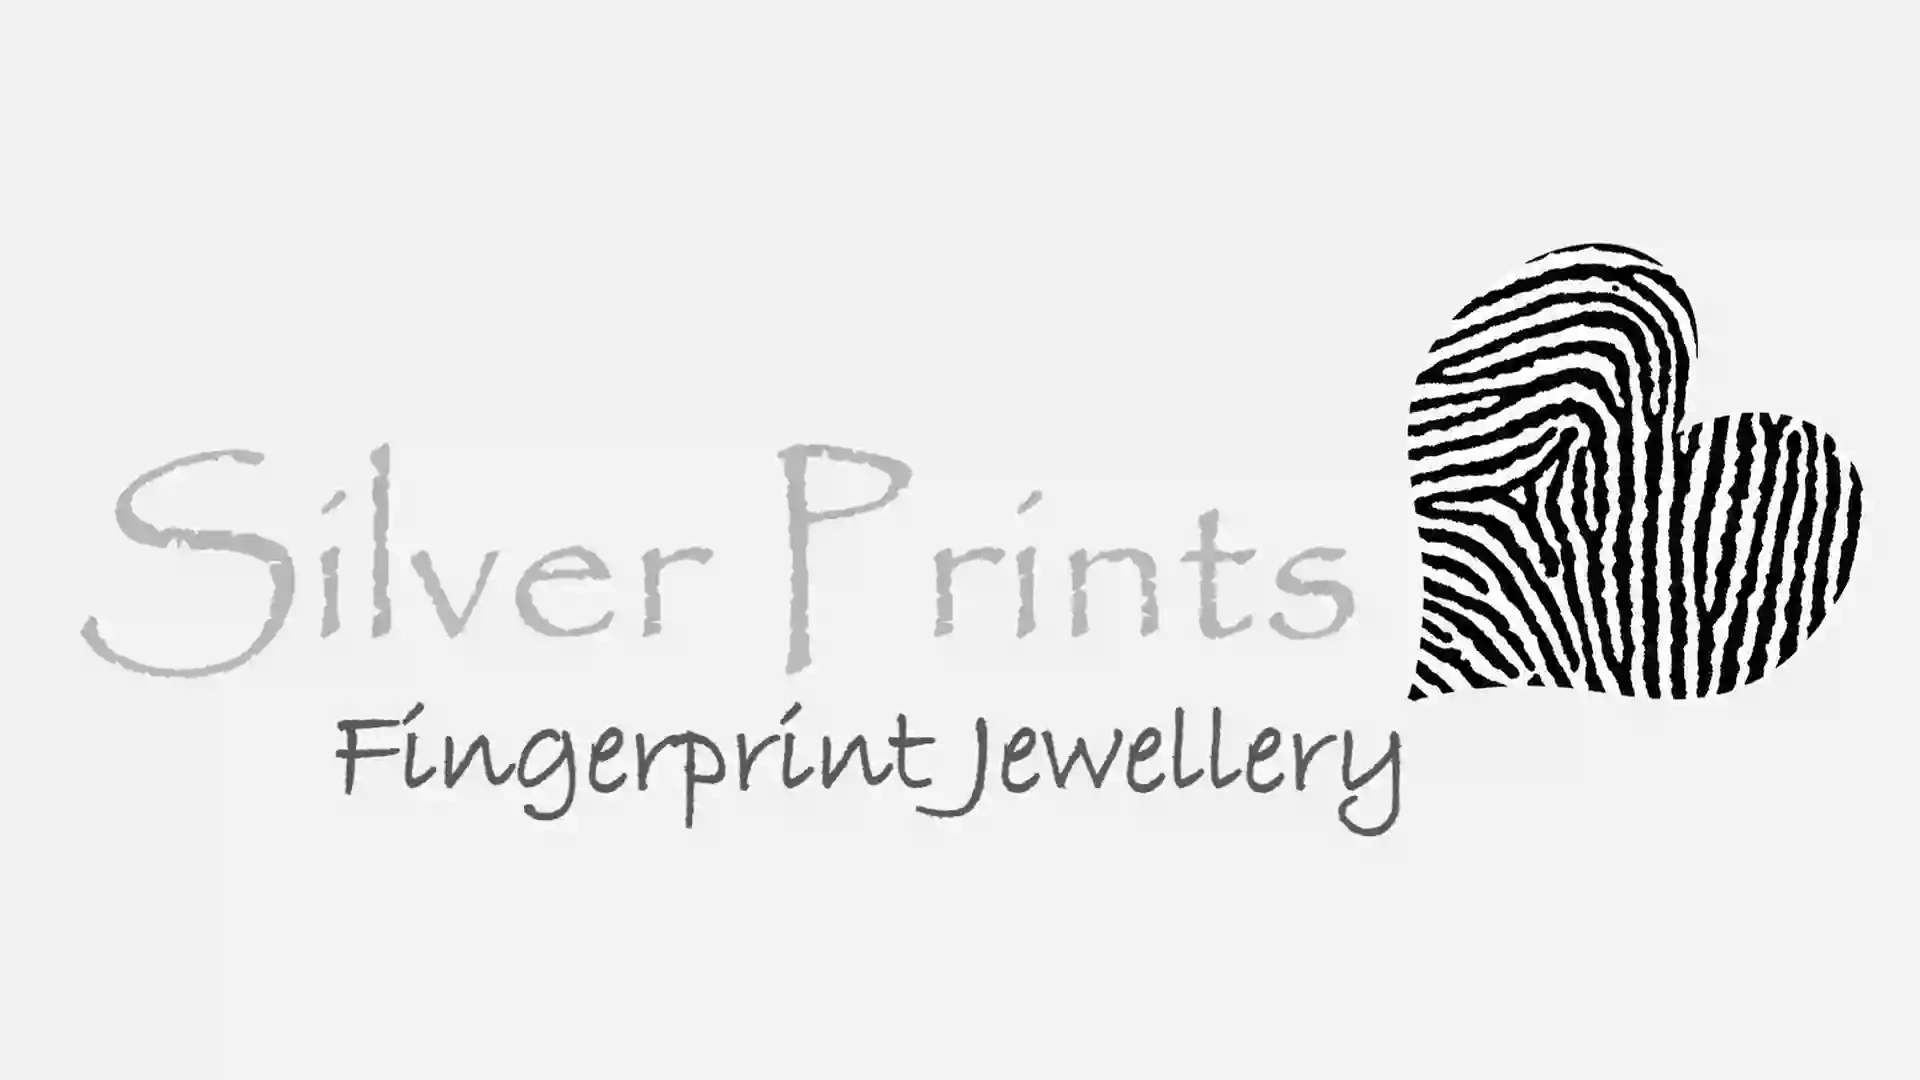 Silver Prints Fingerprint Jewellery